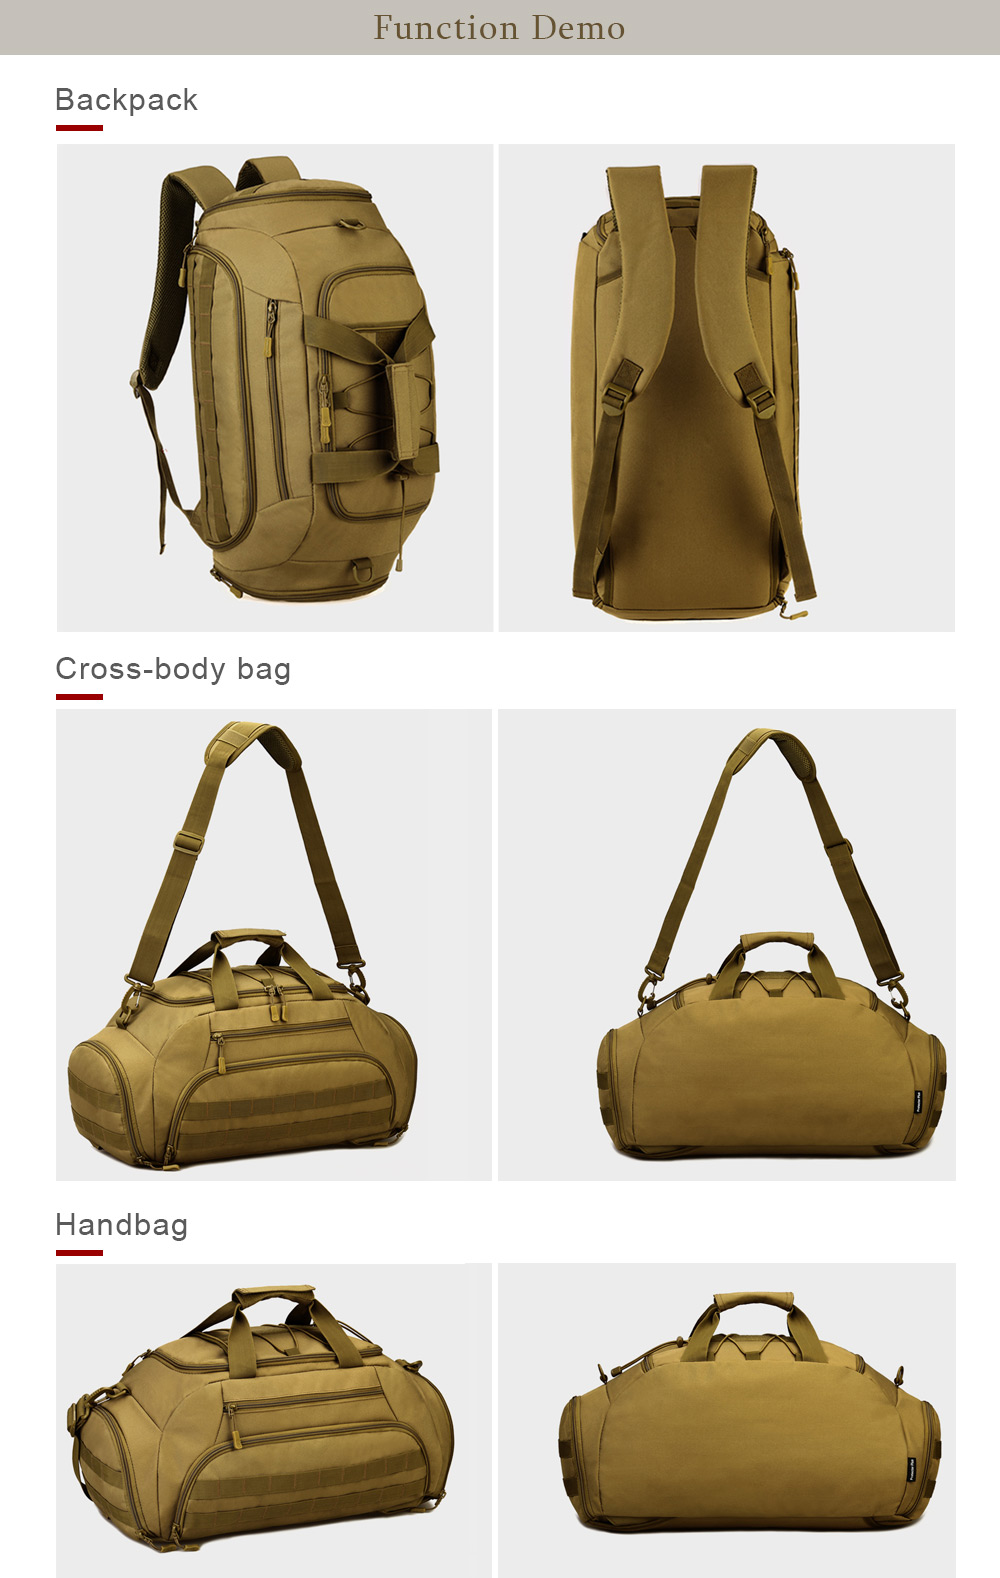 Protector Plus 35L Multifunctional Luggage Travel Duffle Bag Backpack Handbag